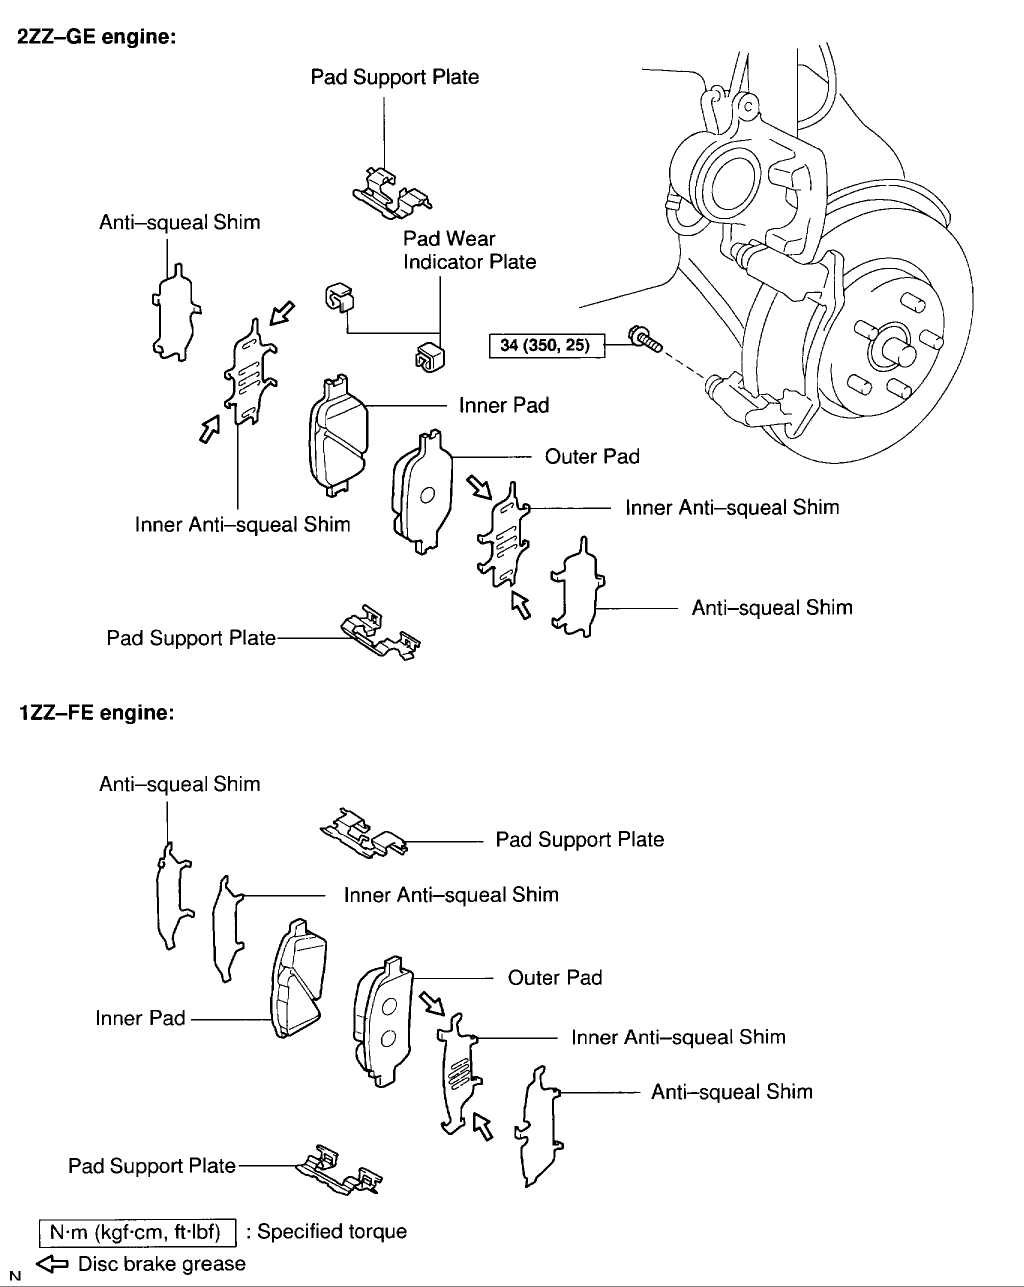 1997 Toyotum Celica Wiring Diagram - Wiring Diagram